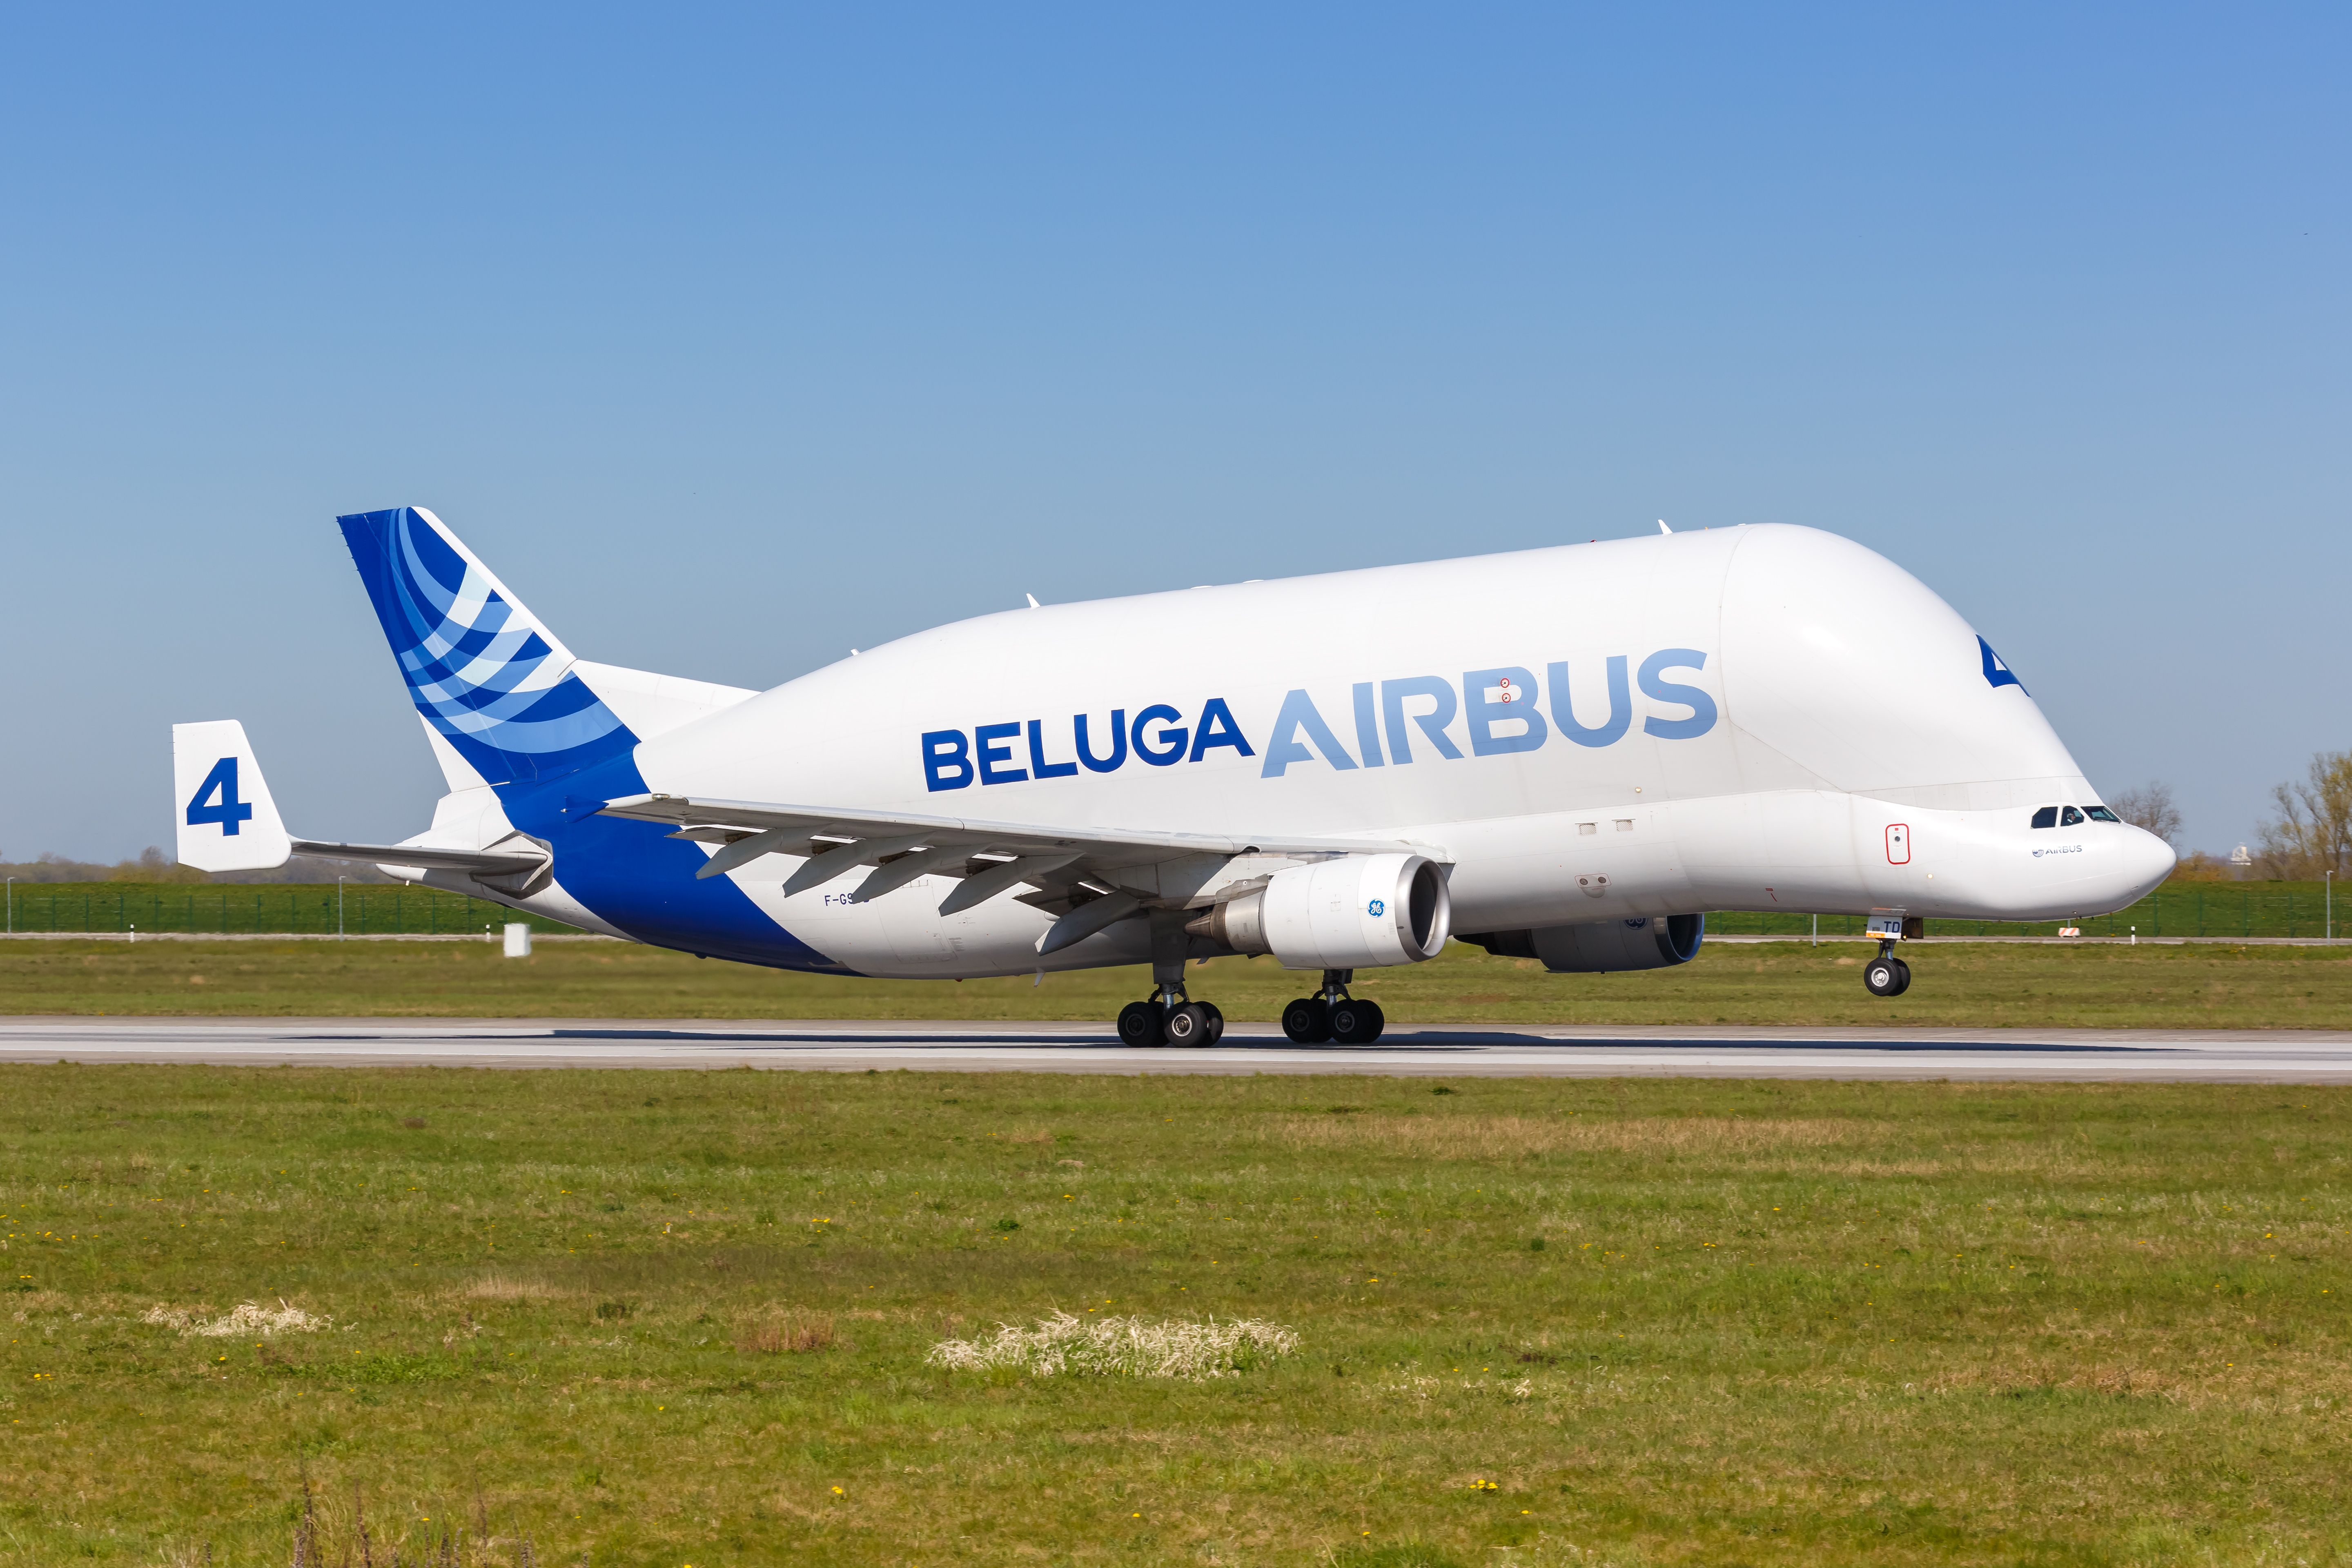 Airbus Beluga Super Transporter A300B4 airplane at Hamburg Finkenwerder airport (XFW) in Germany.